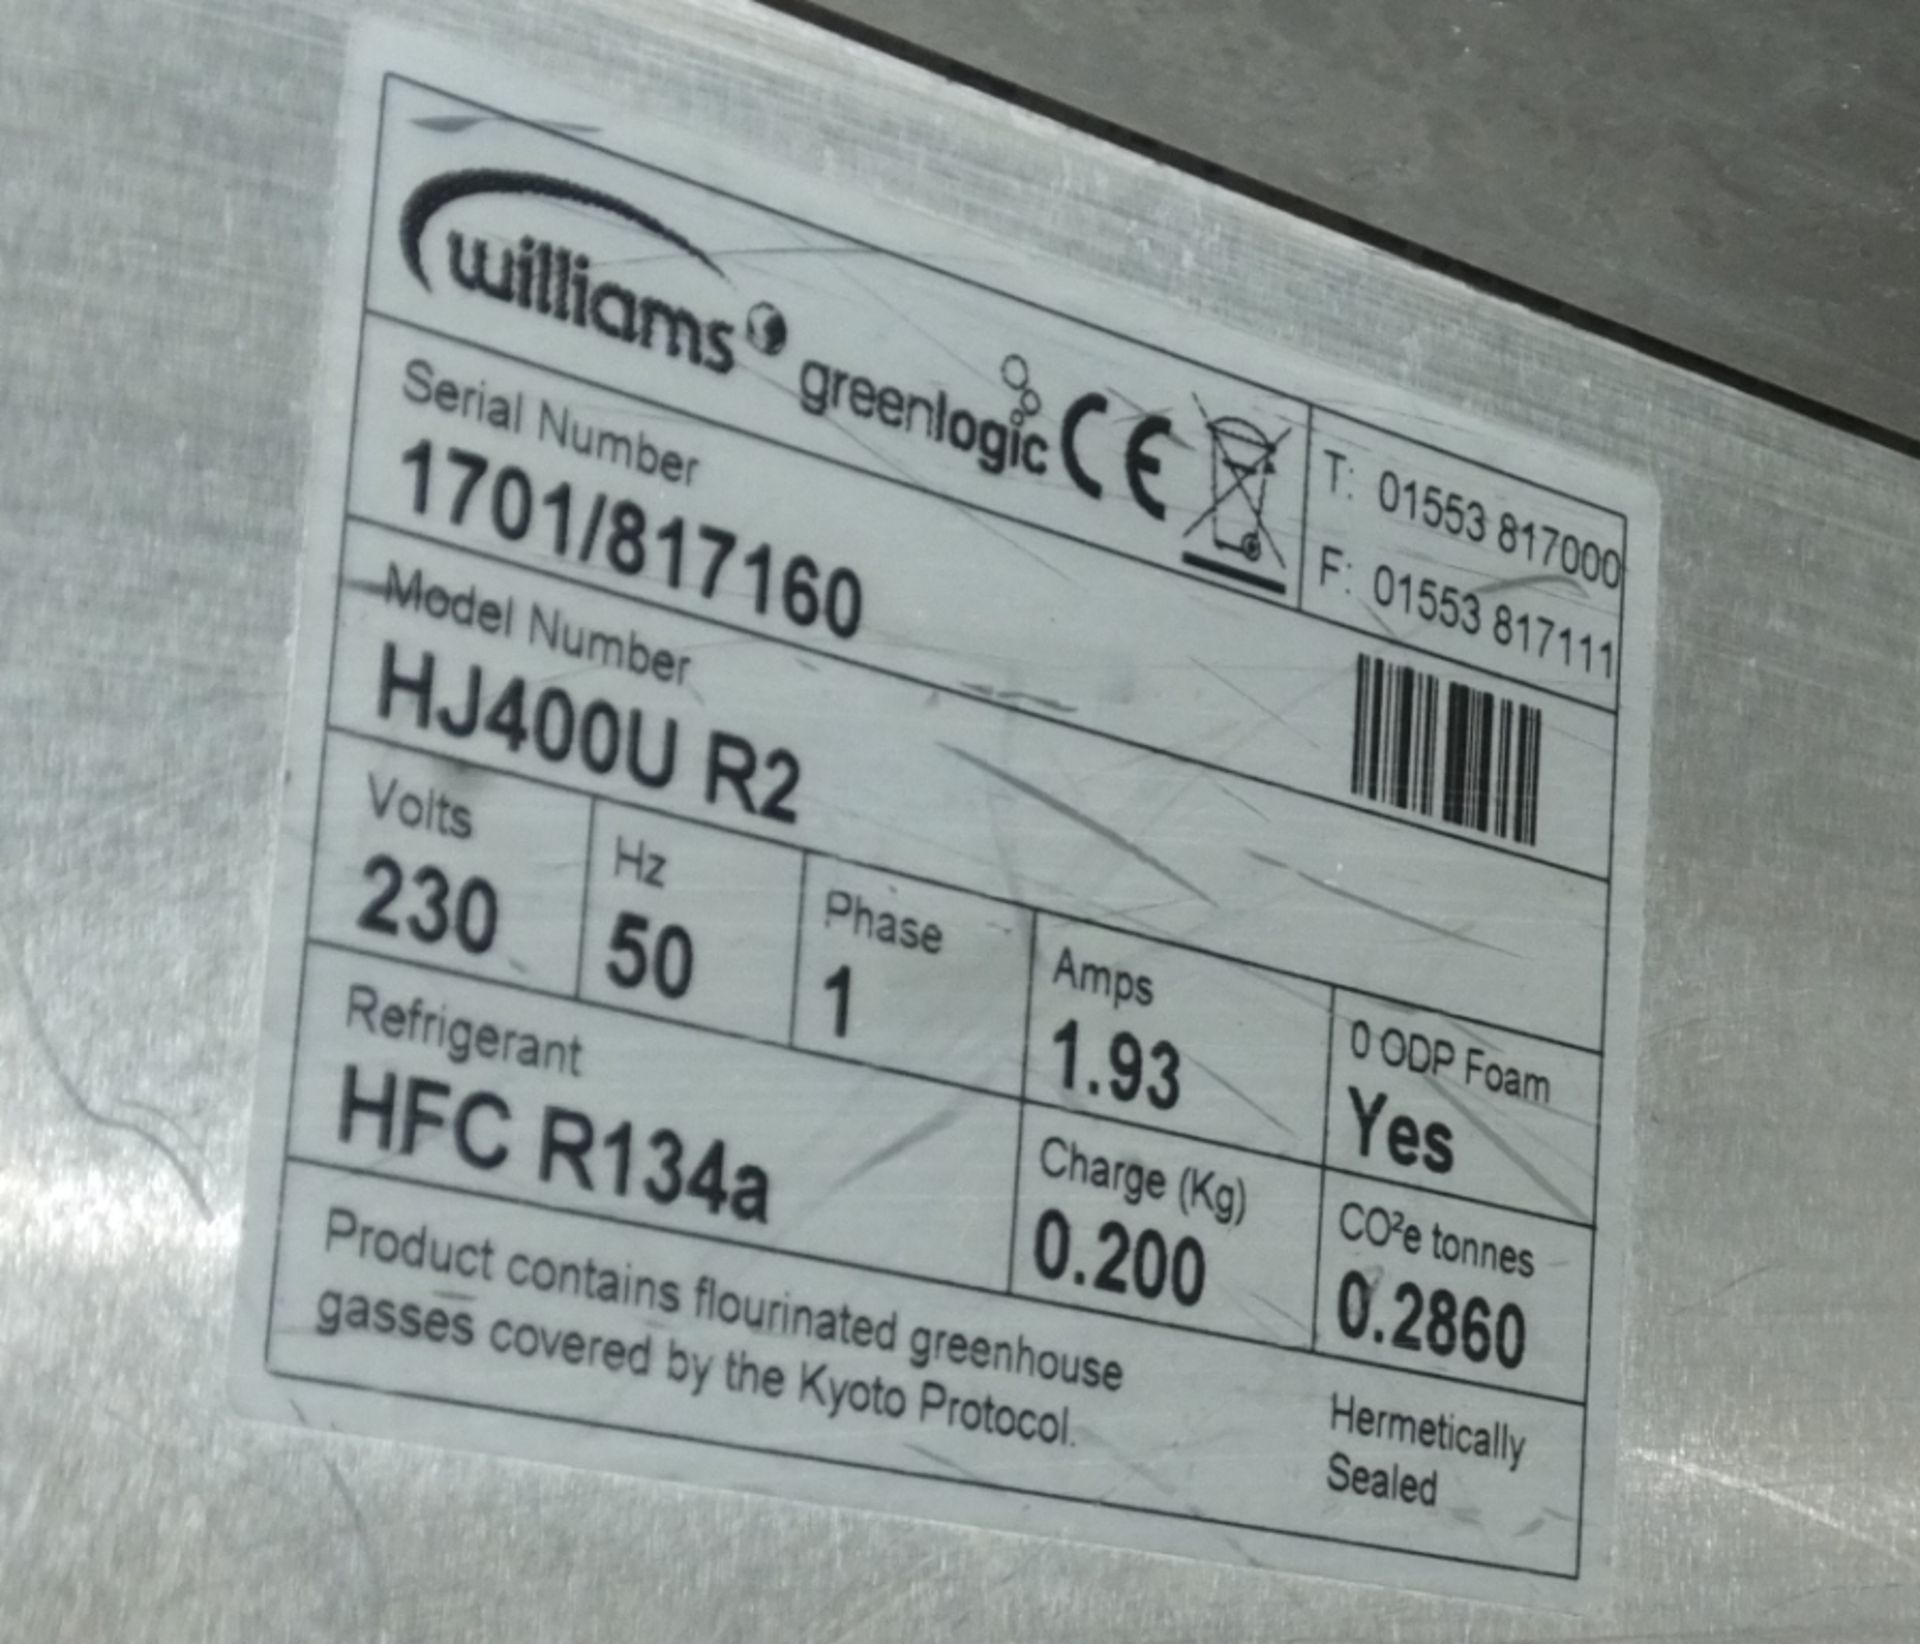 Williams Green Logic Upright Refridgerator HJ400U R2 - Image 3 of 3